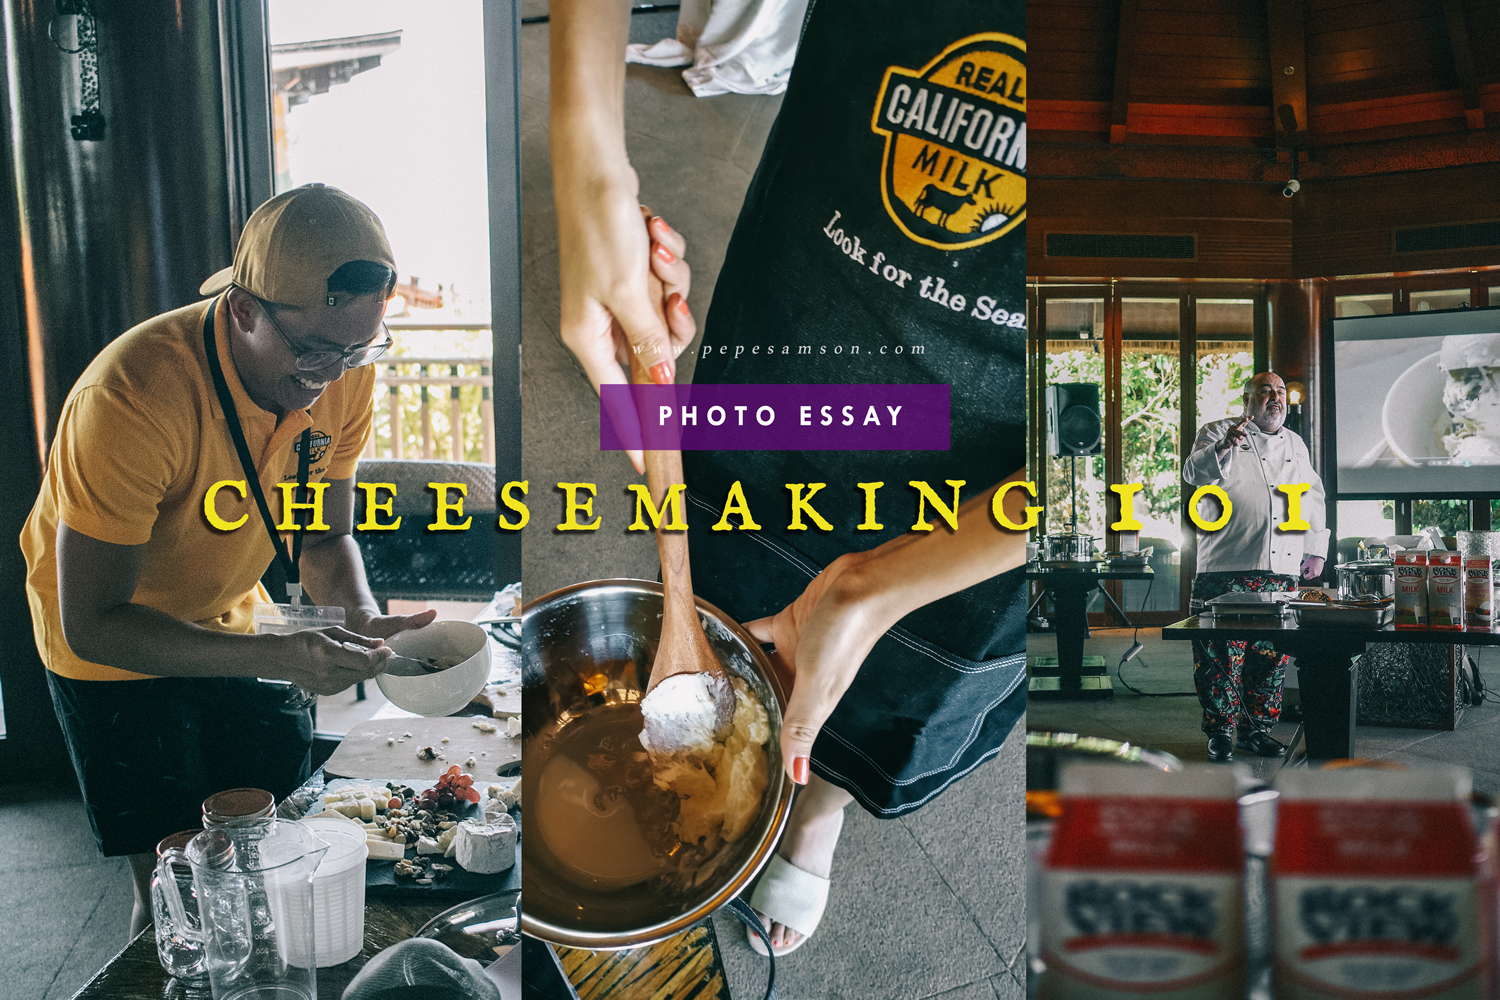 Cheesemaking workshop Real California Milk